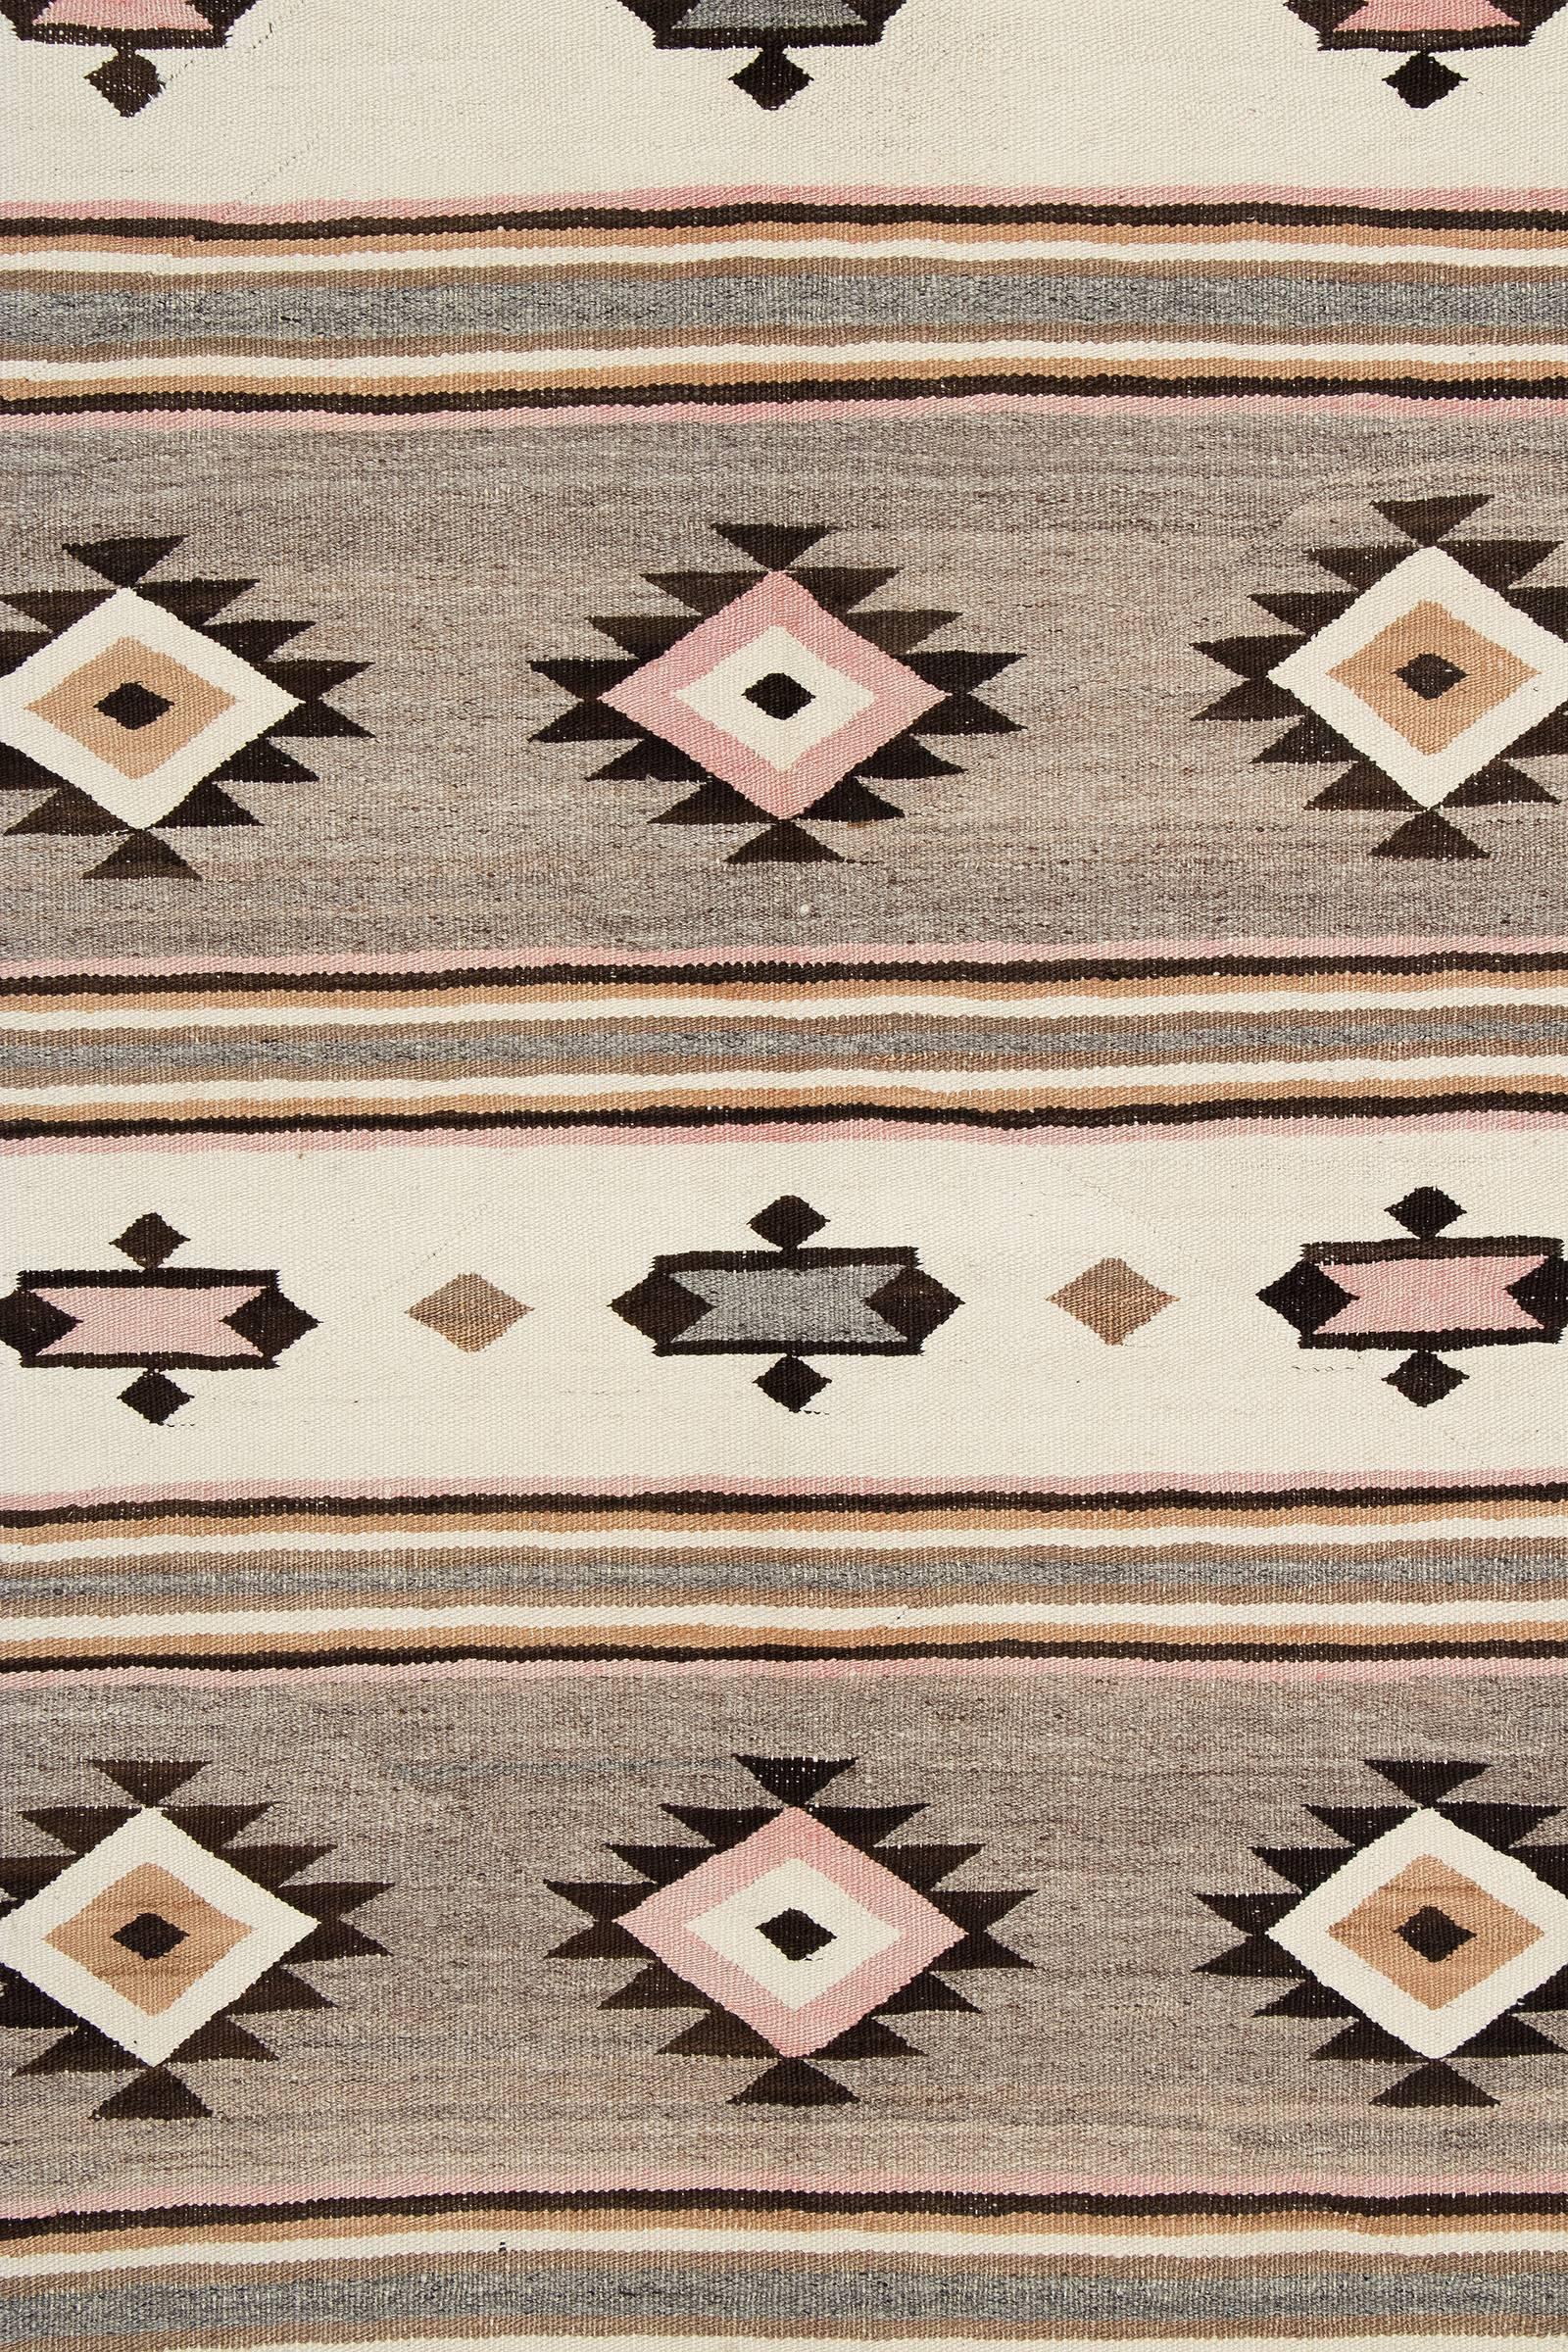 Native American Vintage Navajo Trading Post Rug, Chinle Revival Pattern, circa 1935